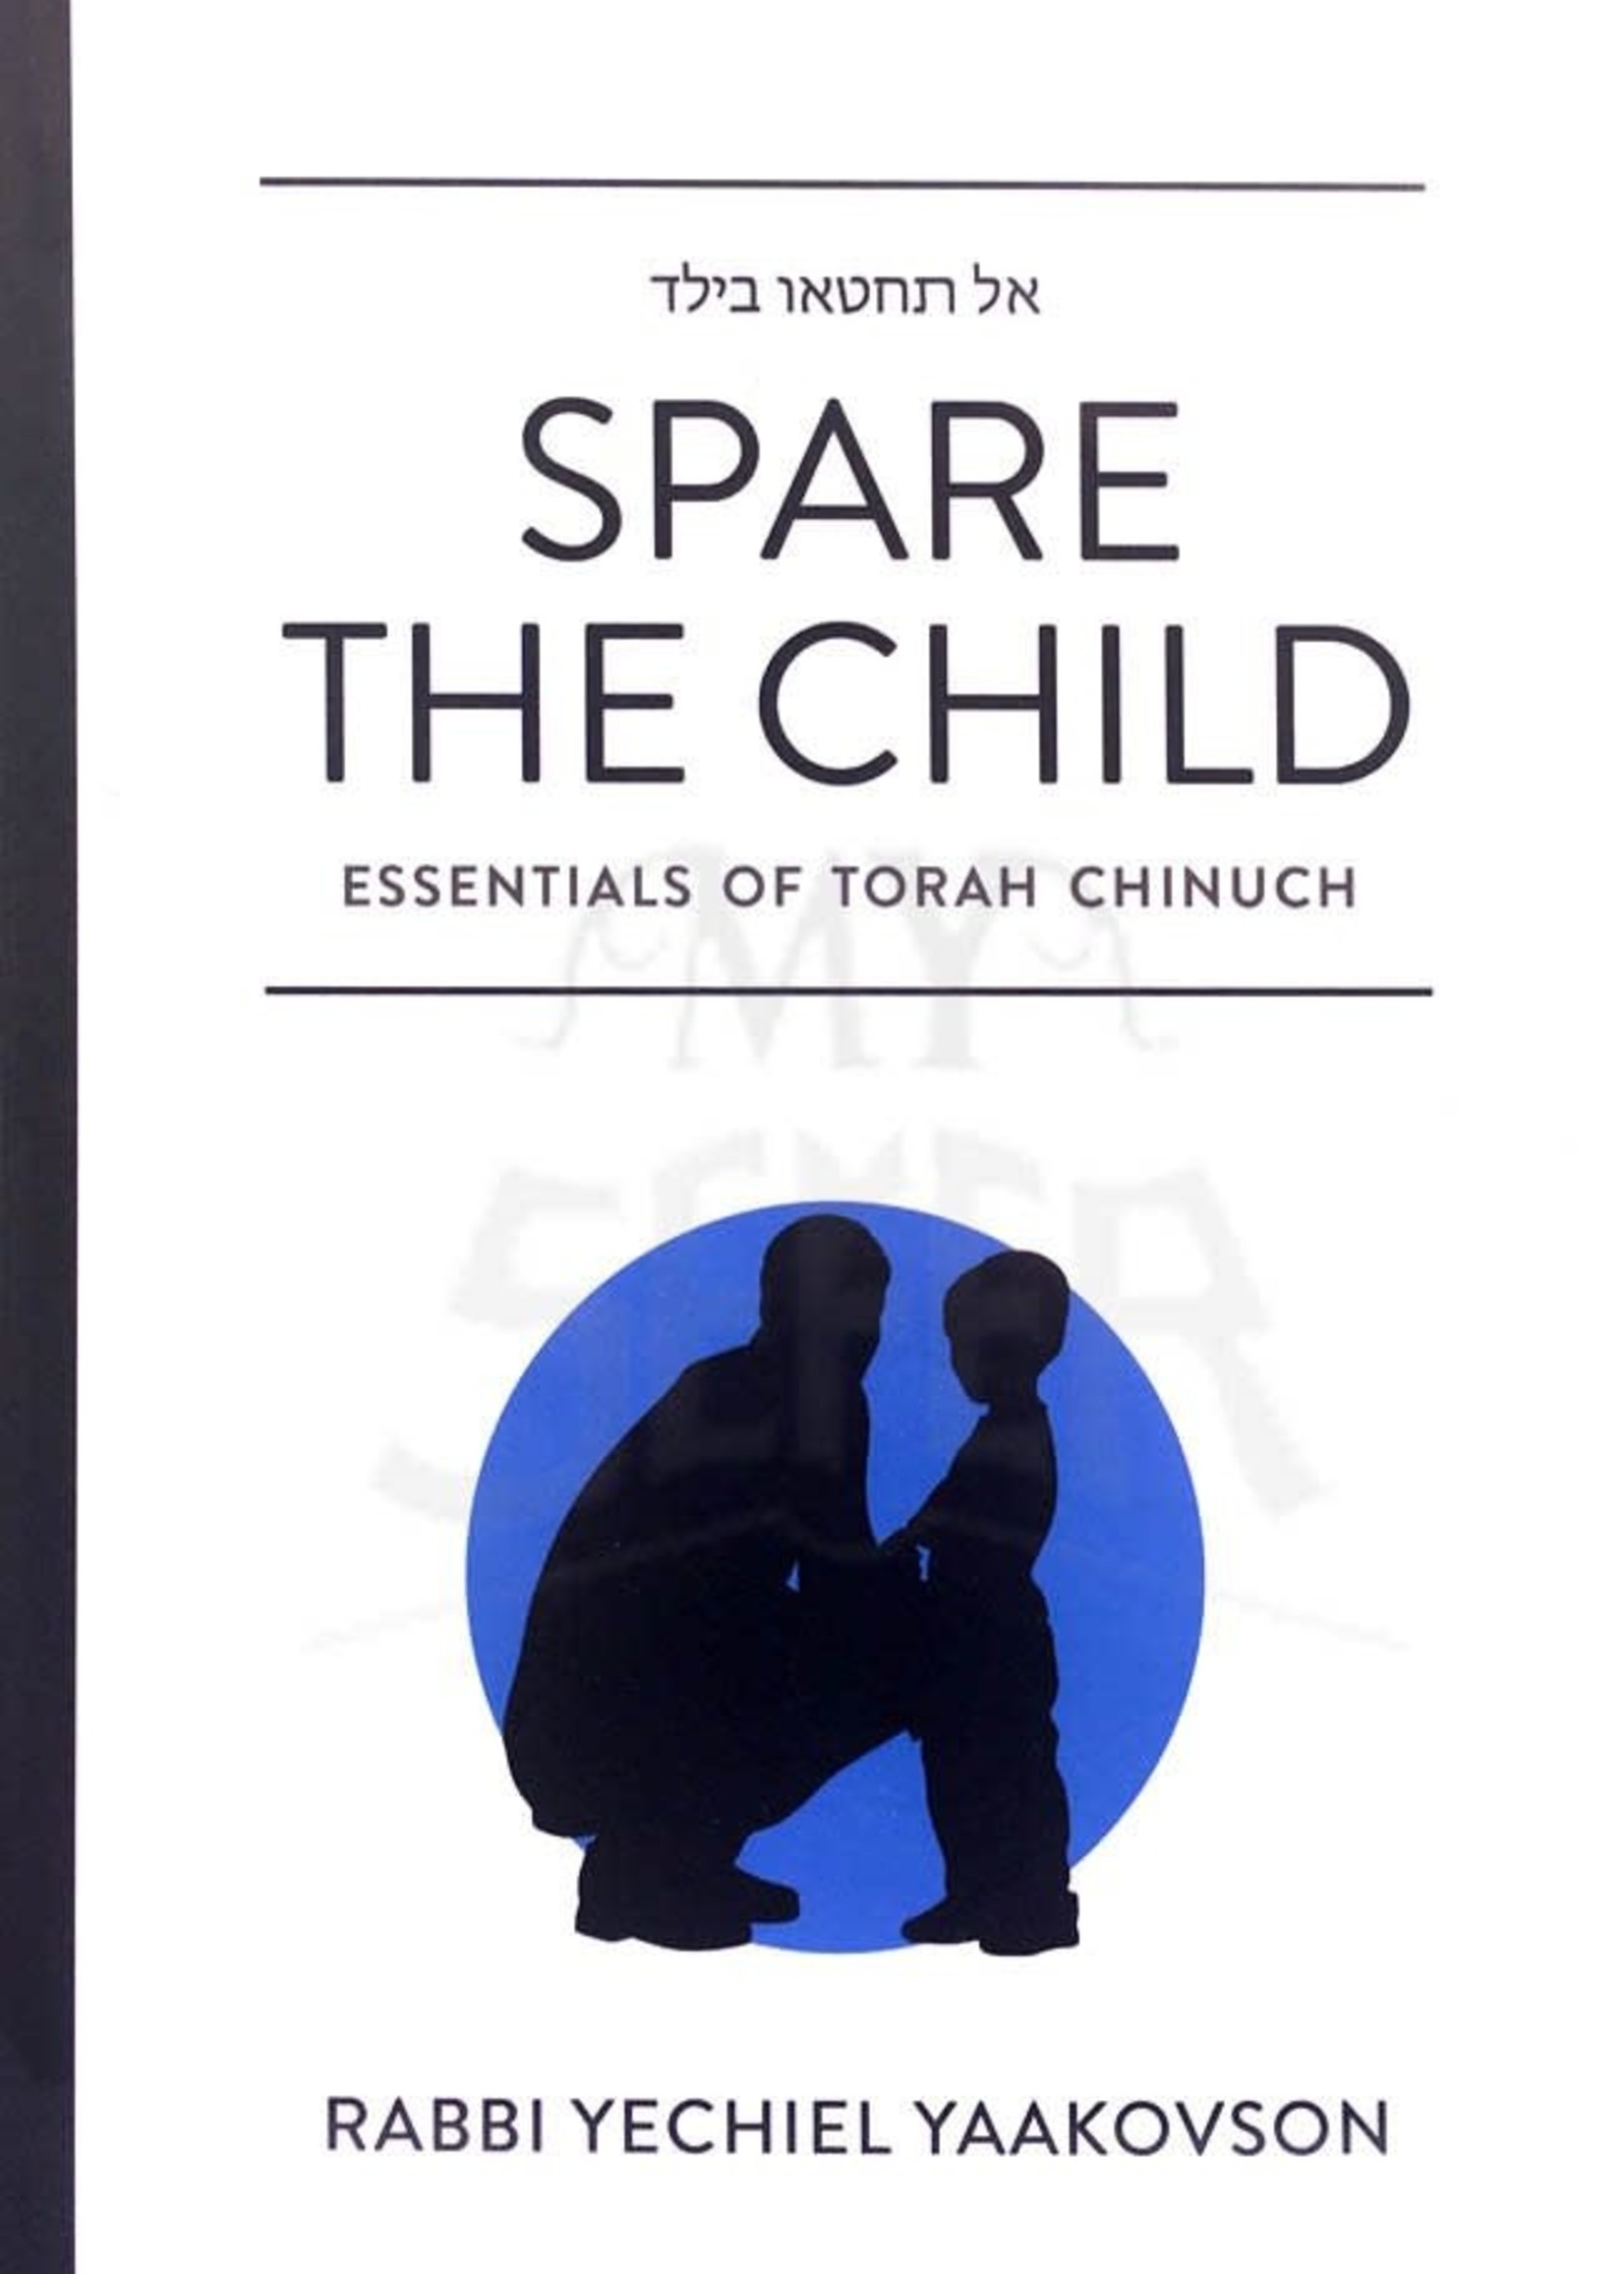 Spare the child - Essentials of Torah Chinuch